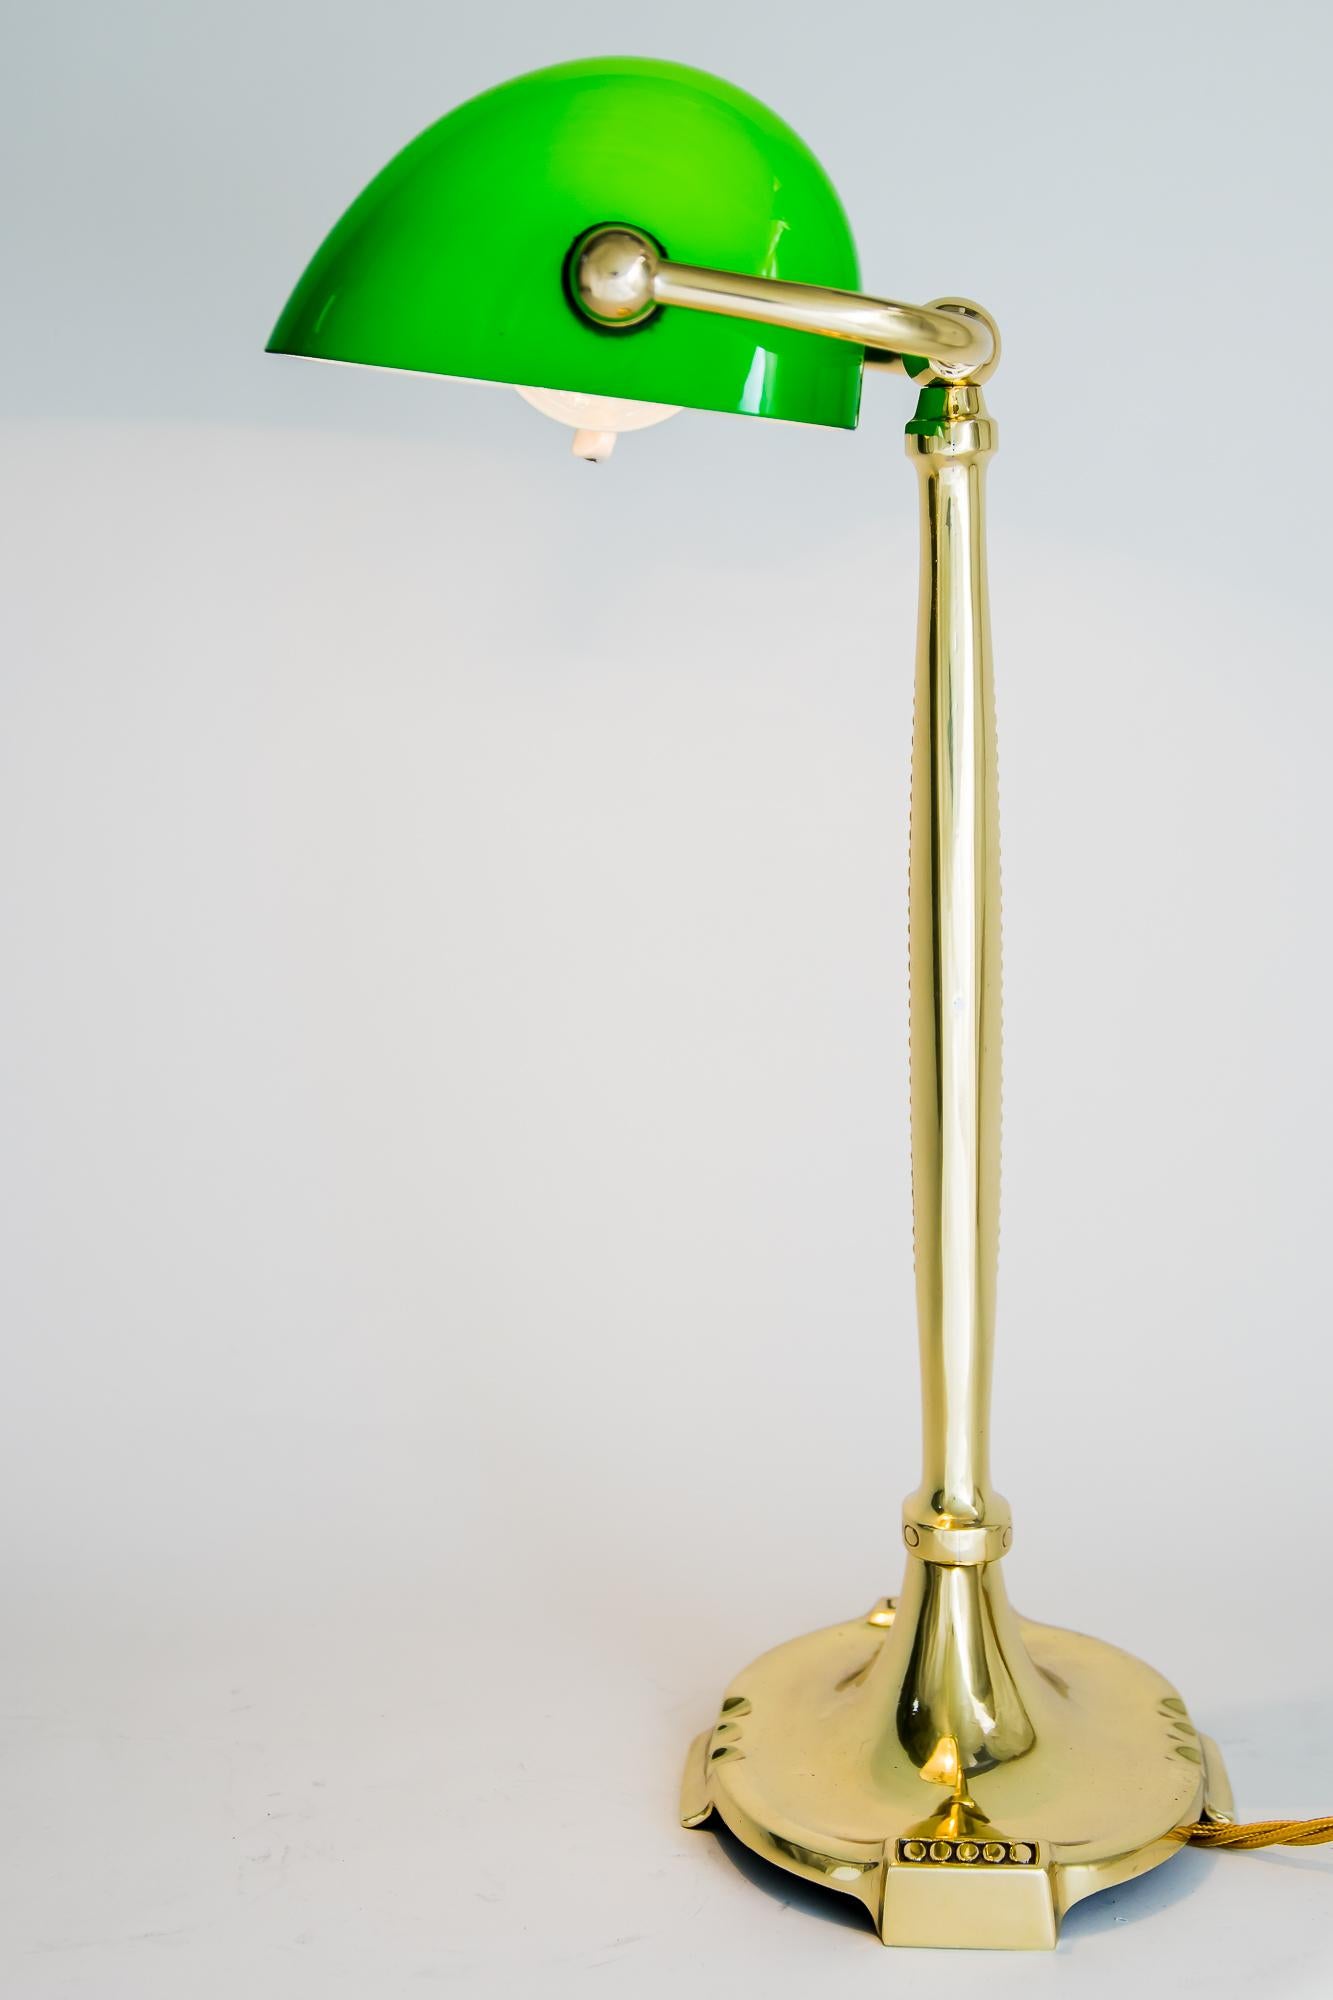 Brass Art Deco Table Lamp with Original Green Shade, Vienna, Around 1920s